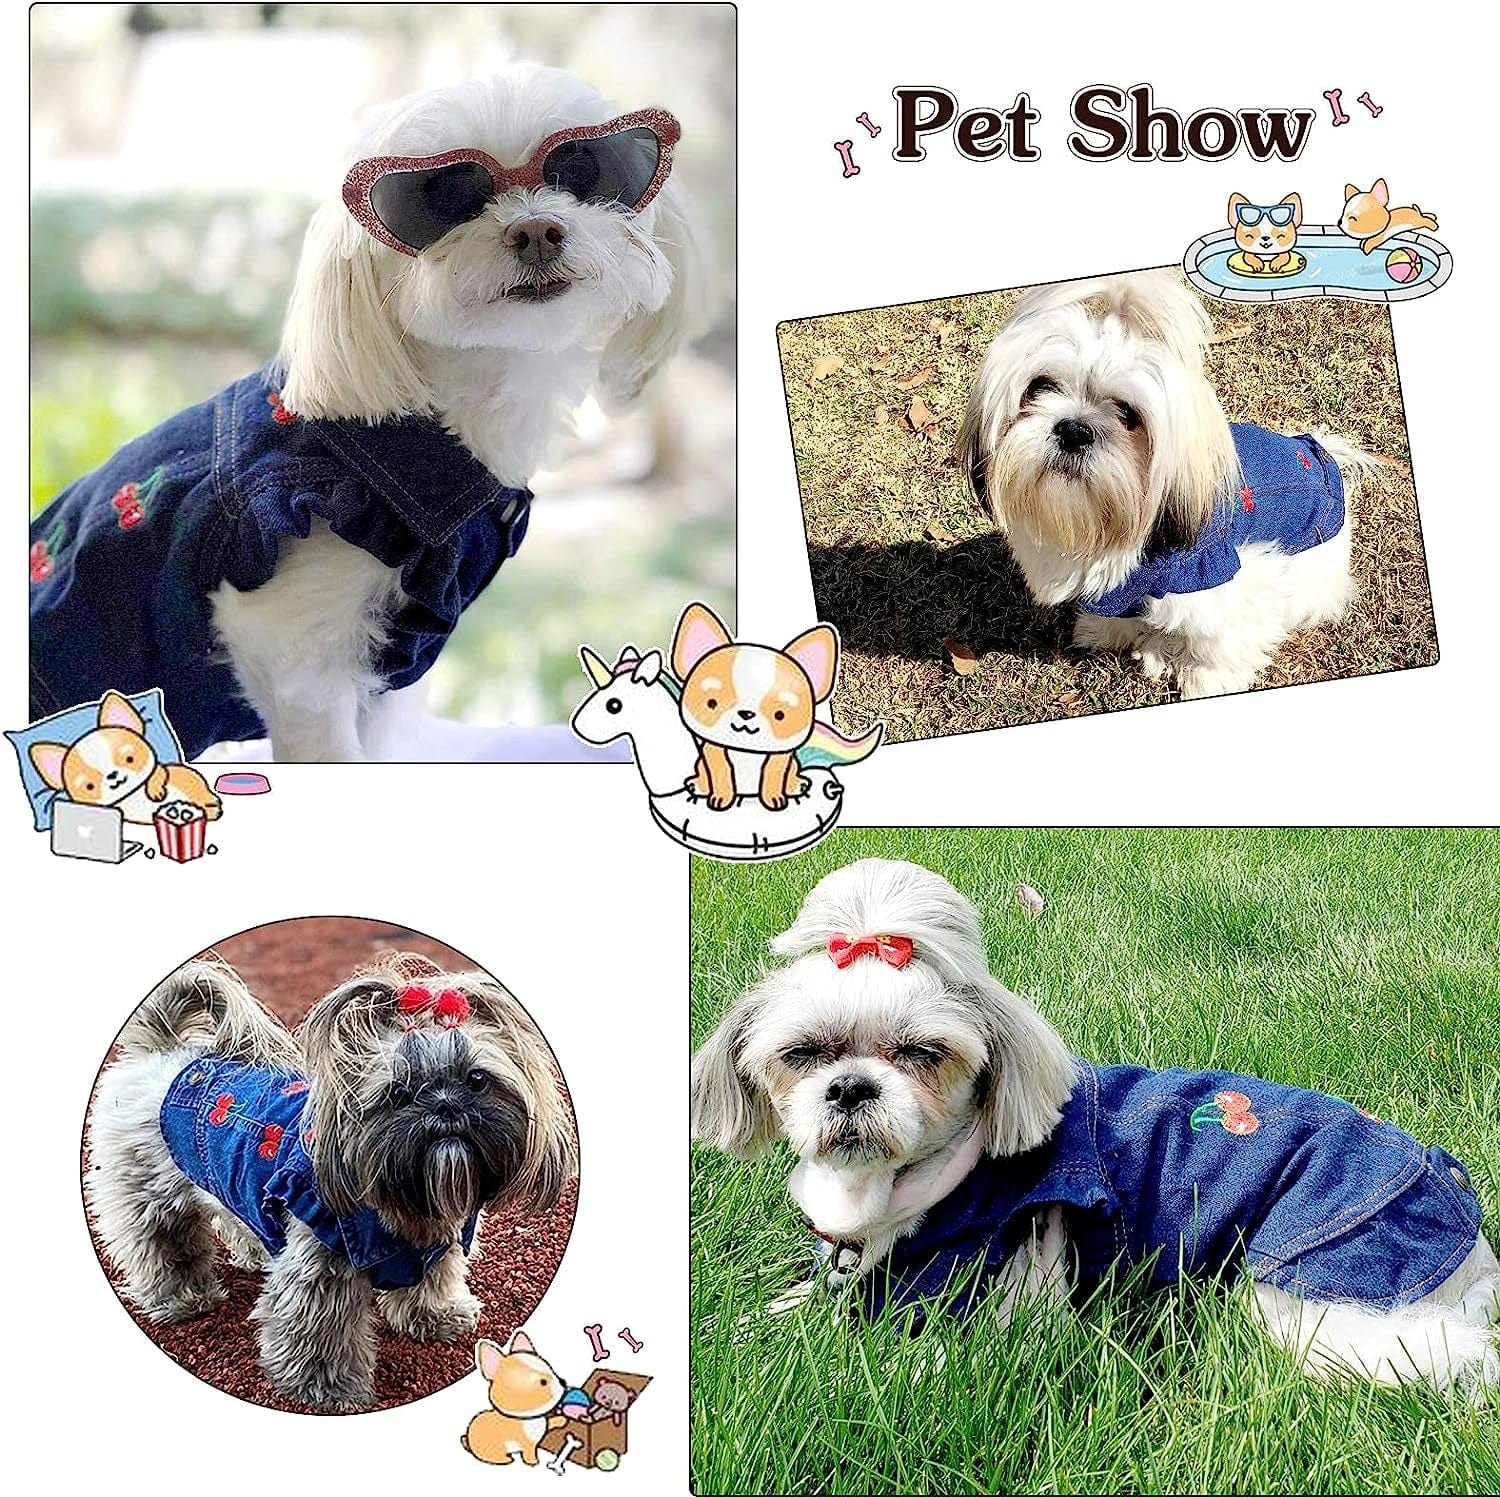 SILD Pet Clothes Dog Jeans Jacket Cool Blue Denim Coat Small Medium Dogs Lapel Vests Classic Puppy Hoodies (XS, Cherry) Animals & Pet Supplies > Pet Supplies > Dog Supplies > Dog Apparel SILD   